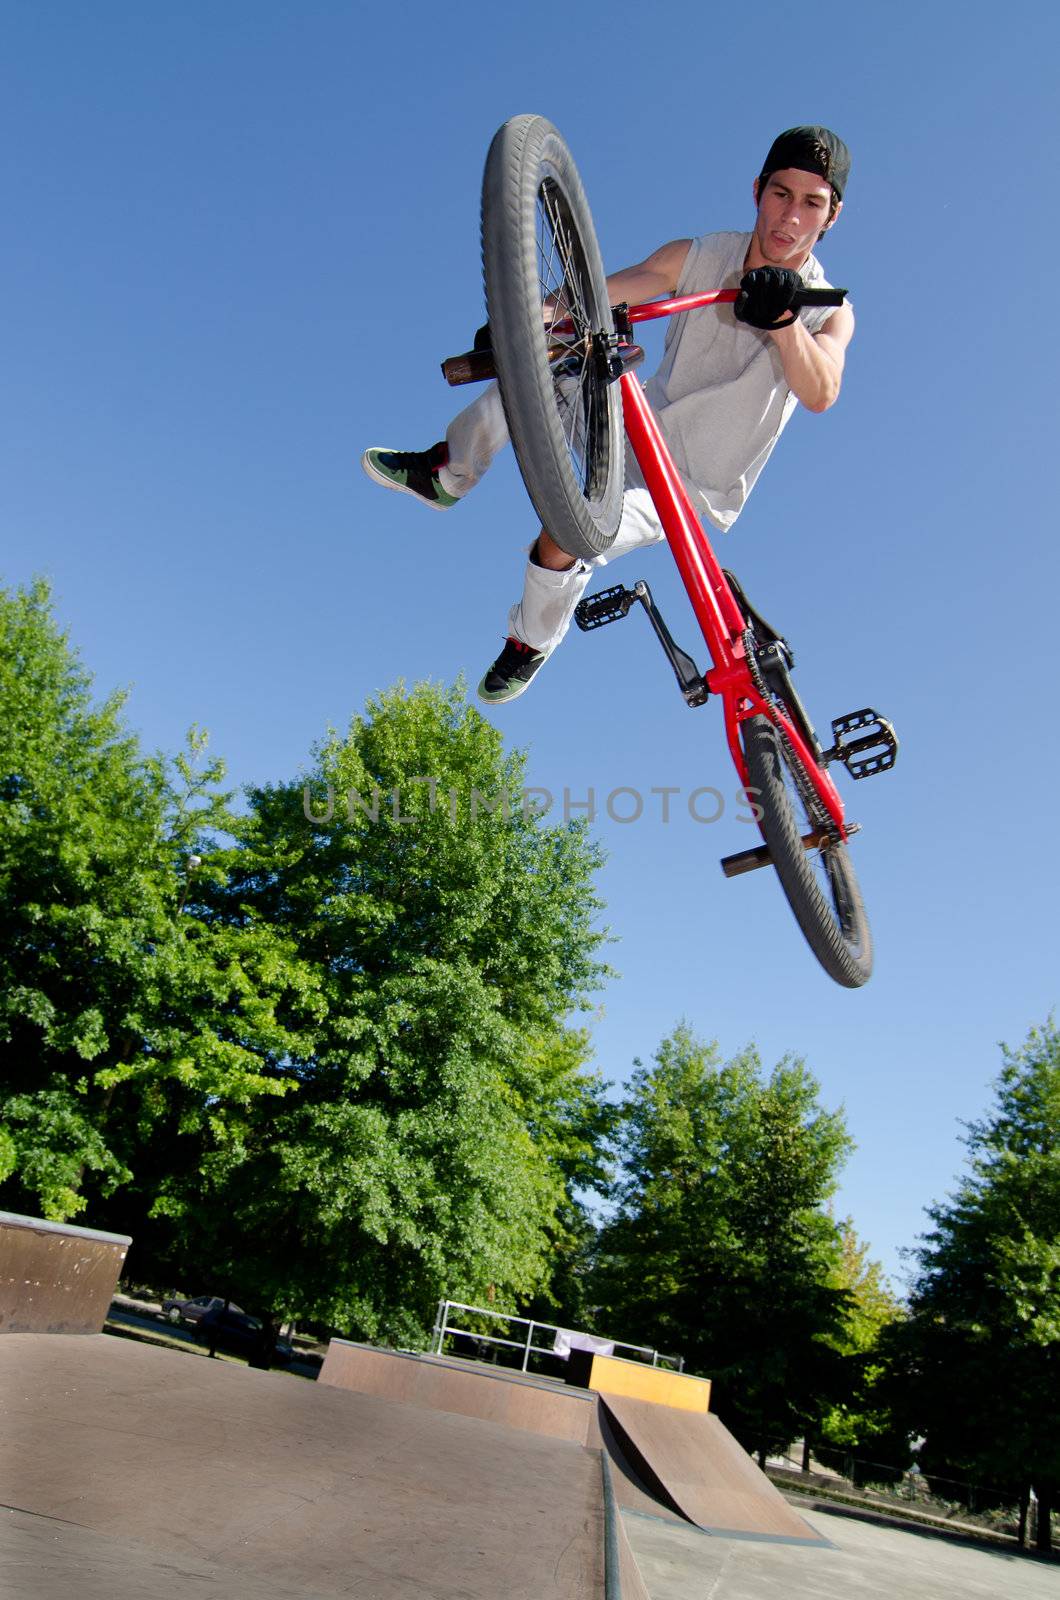 BMX Bike Stunt tail whip by homydesign